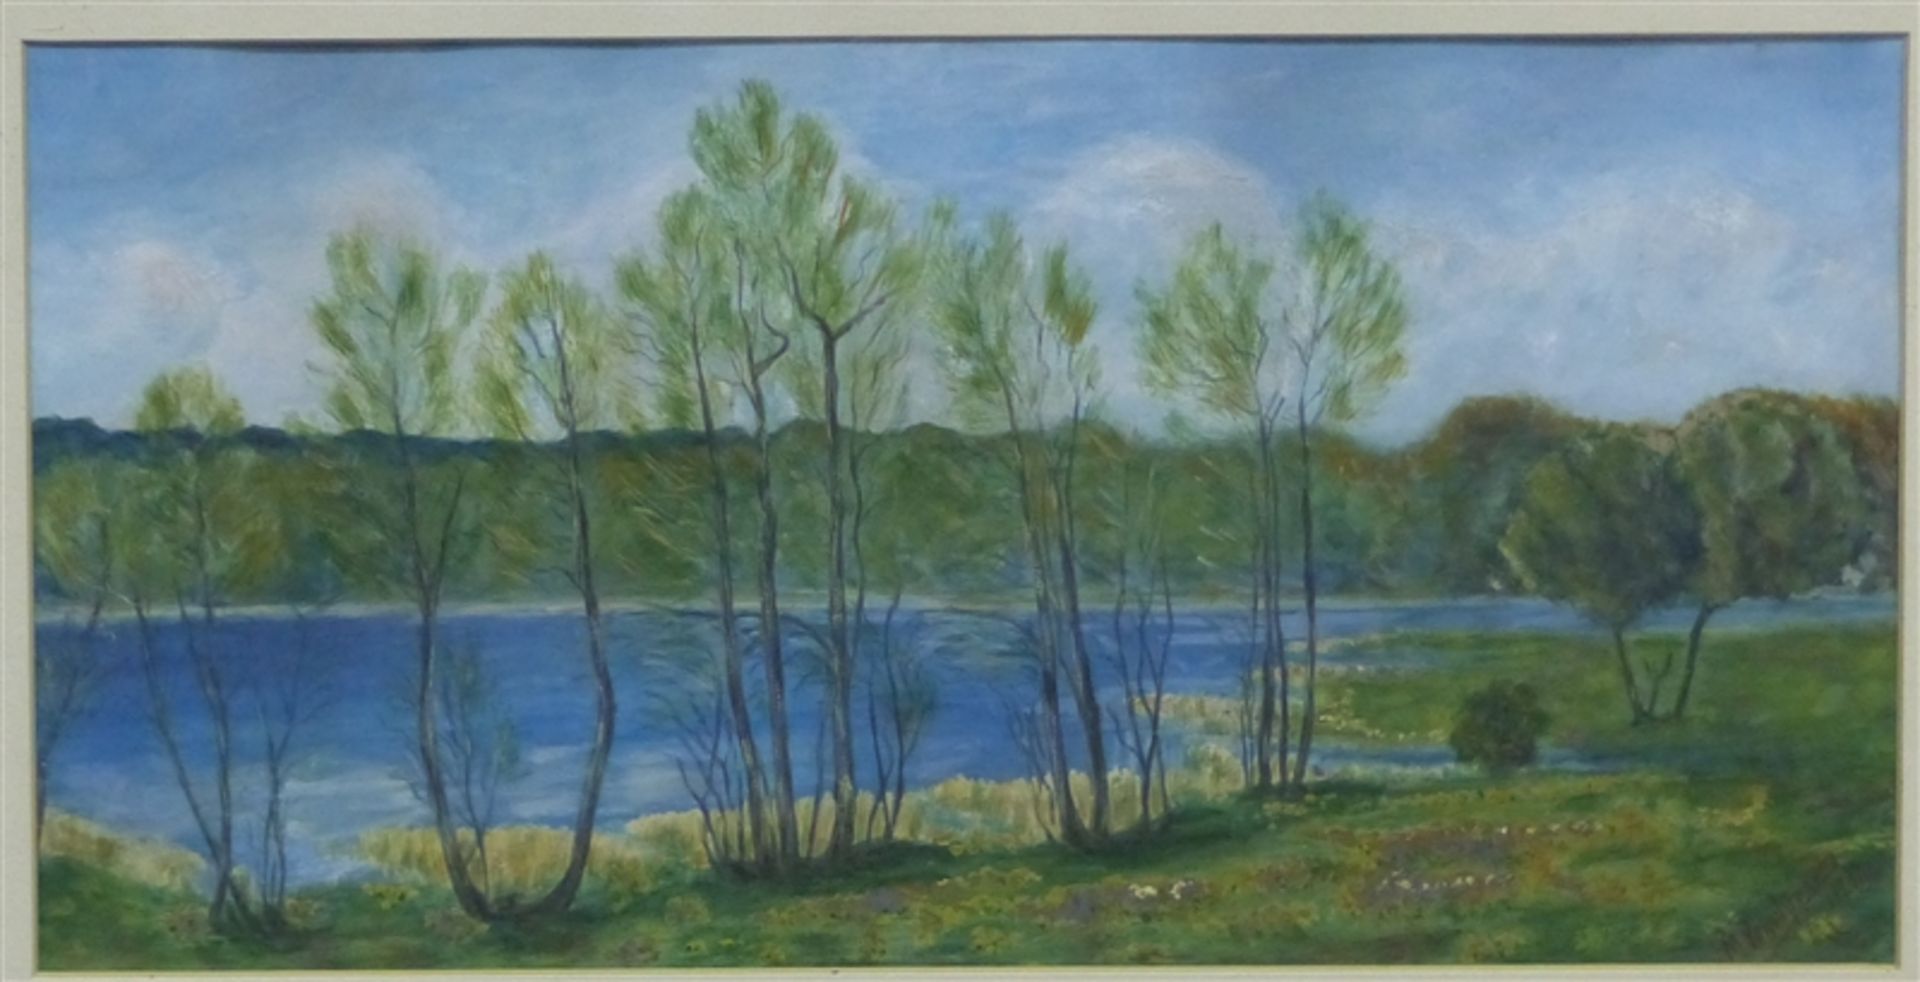 Vogelsang, M. Aquarell auf Papier, Ausschnitt einer Flusslandschaft mit Bäumen, rechts unten